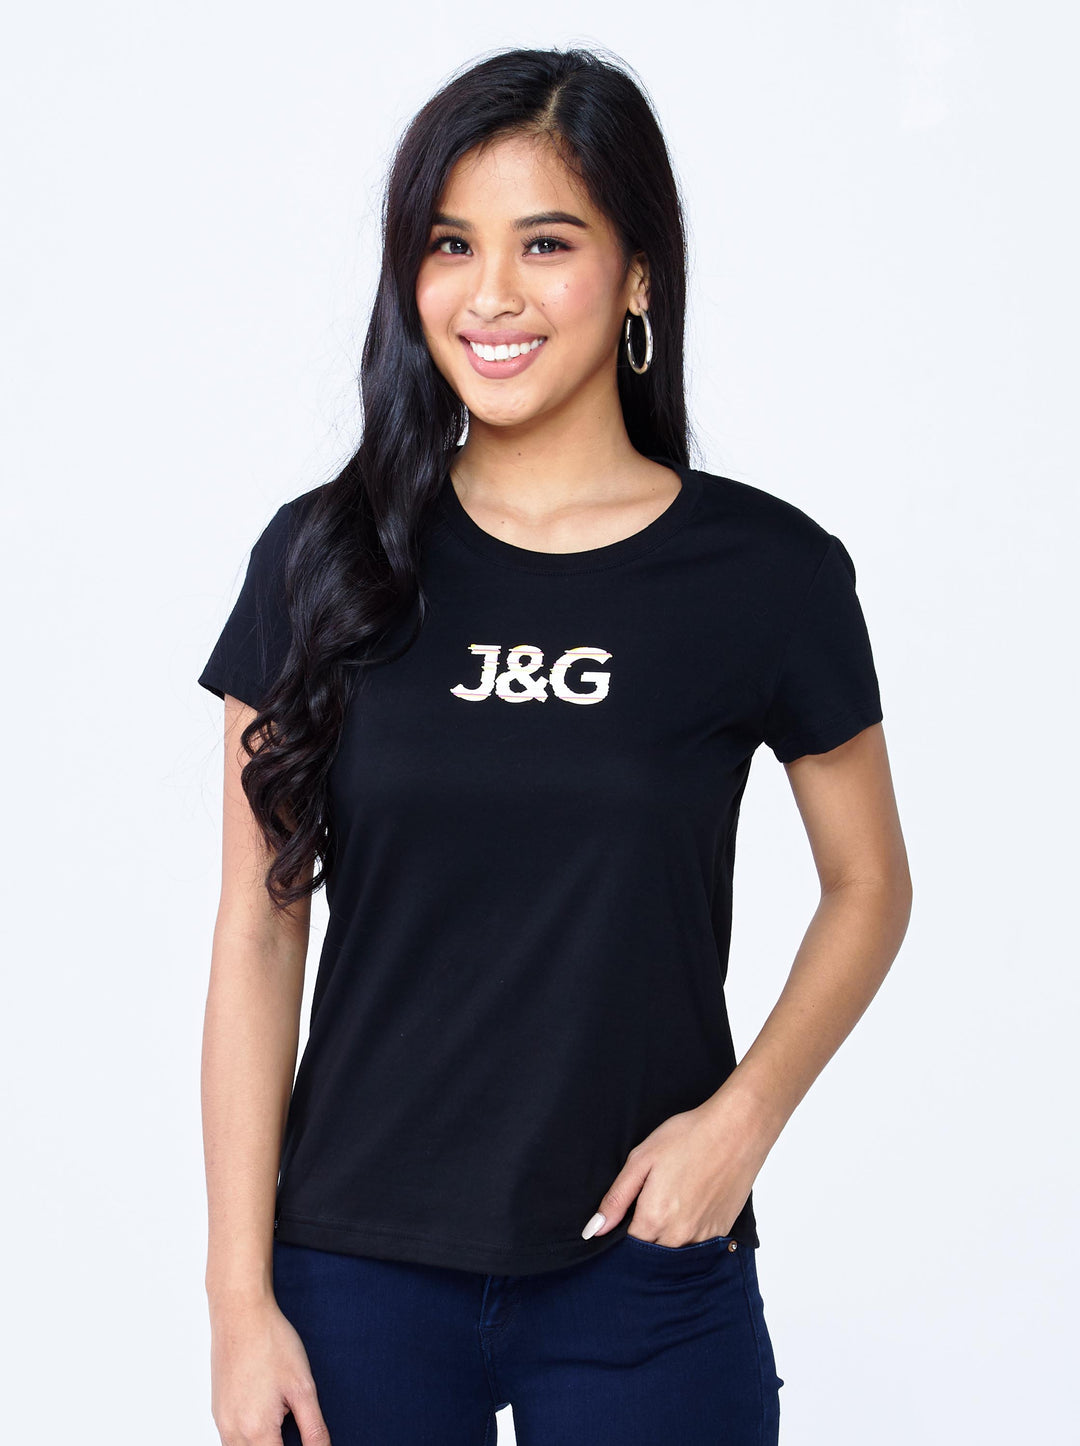 J&G Graphic Tee